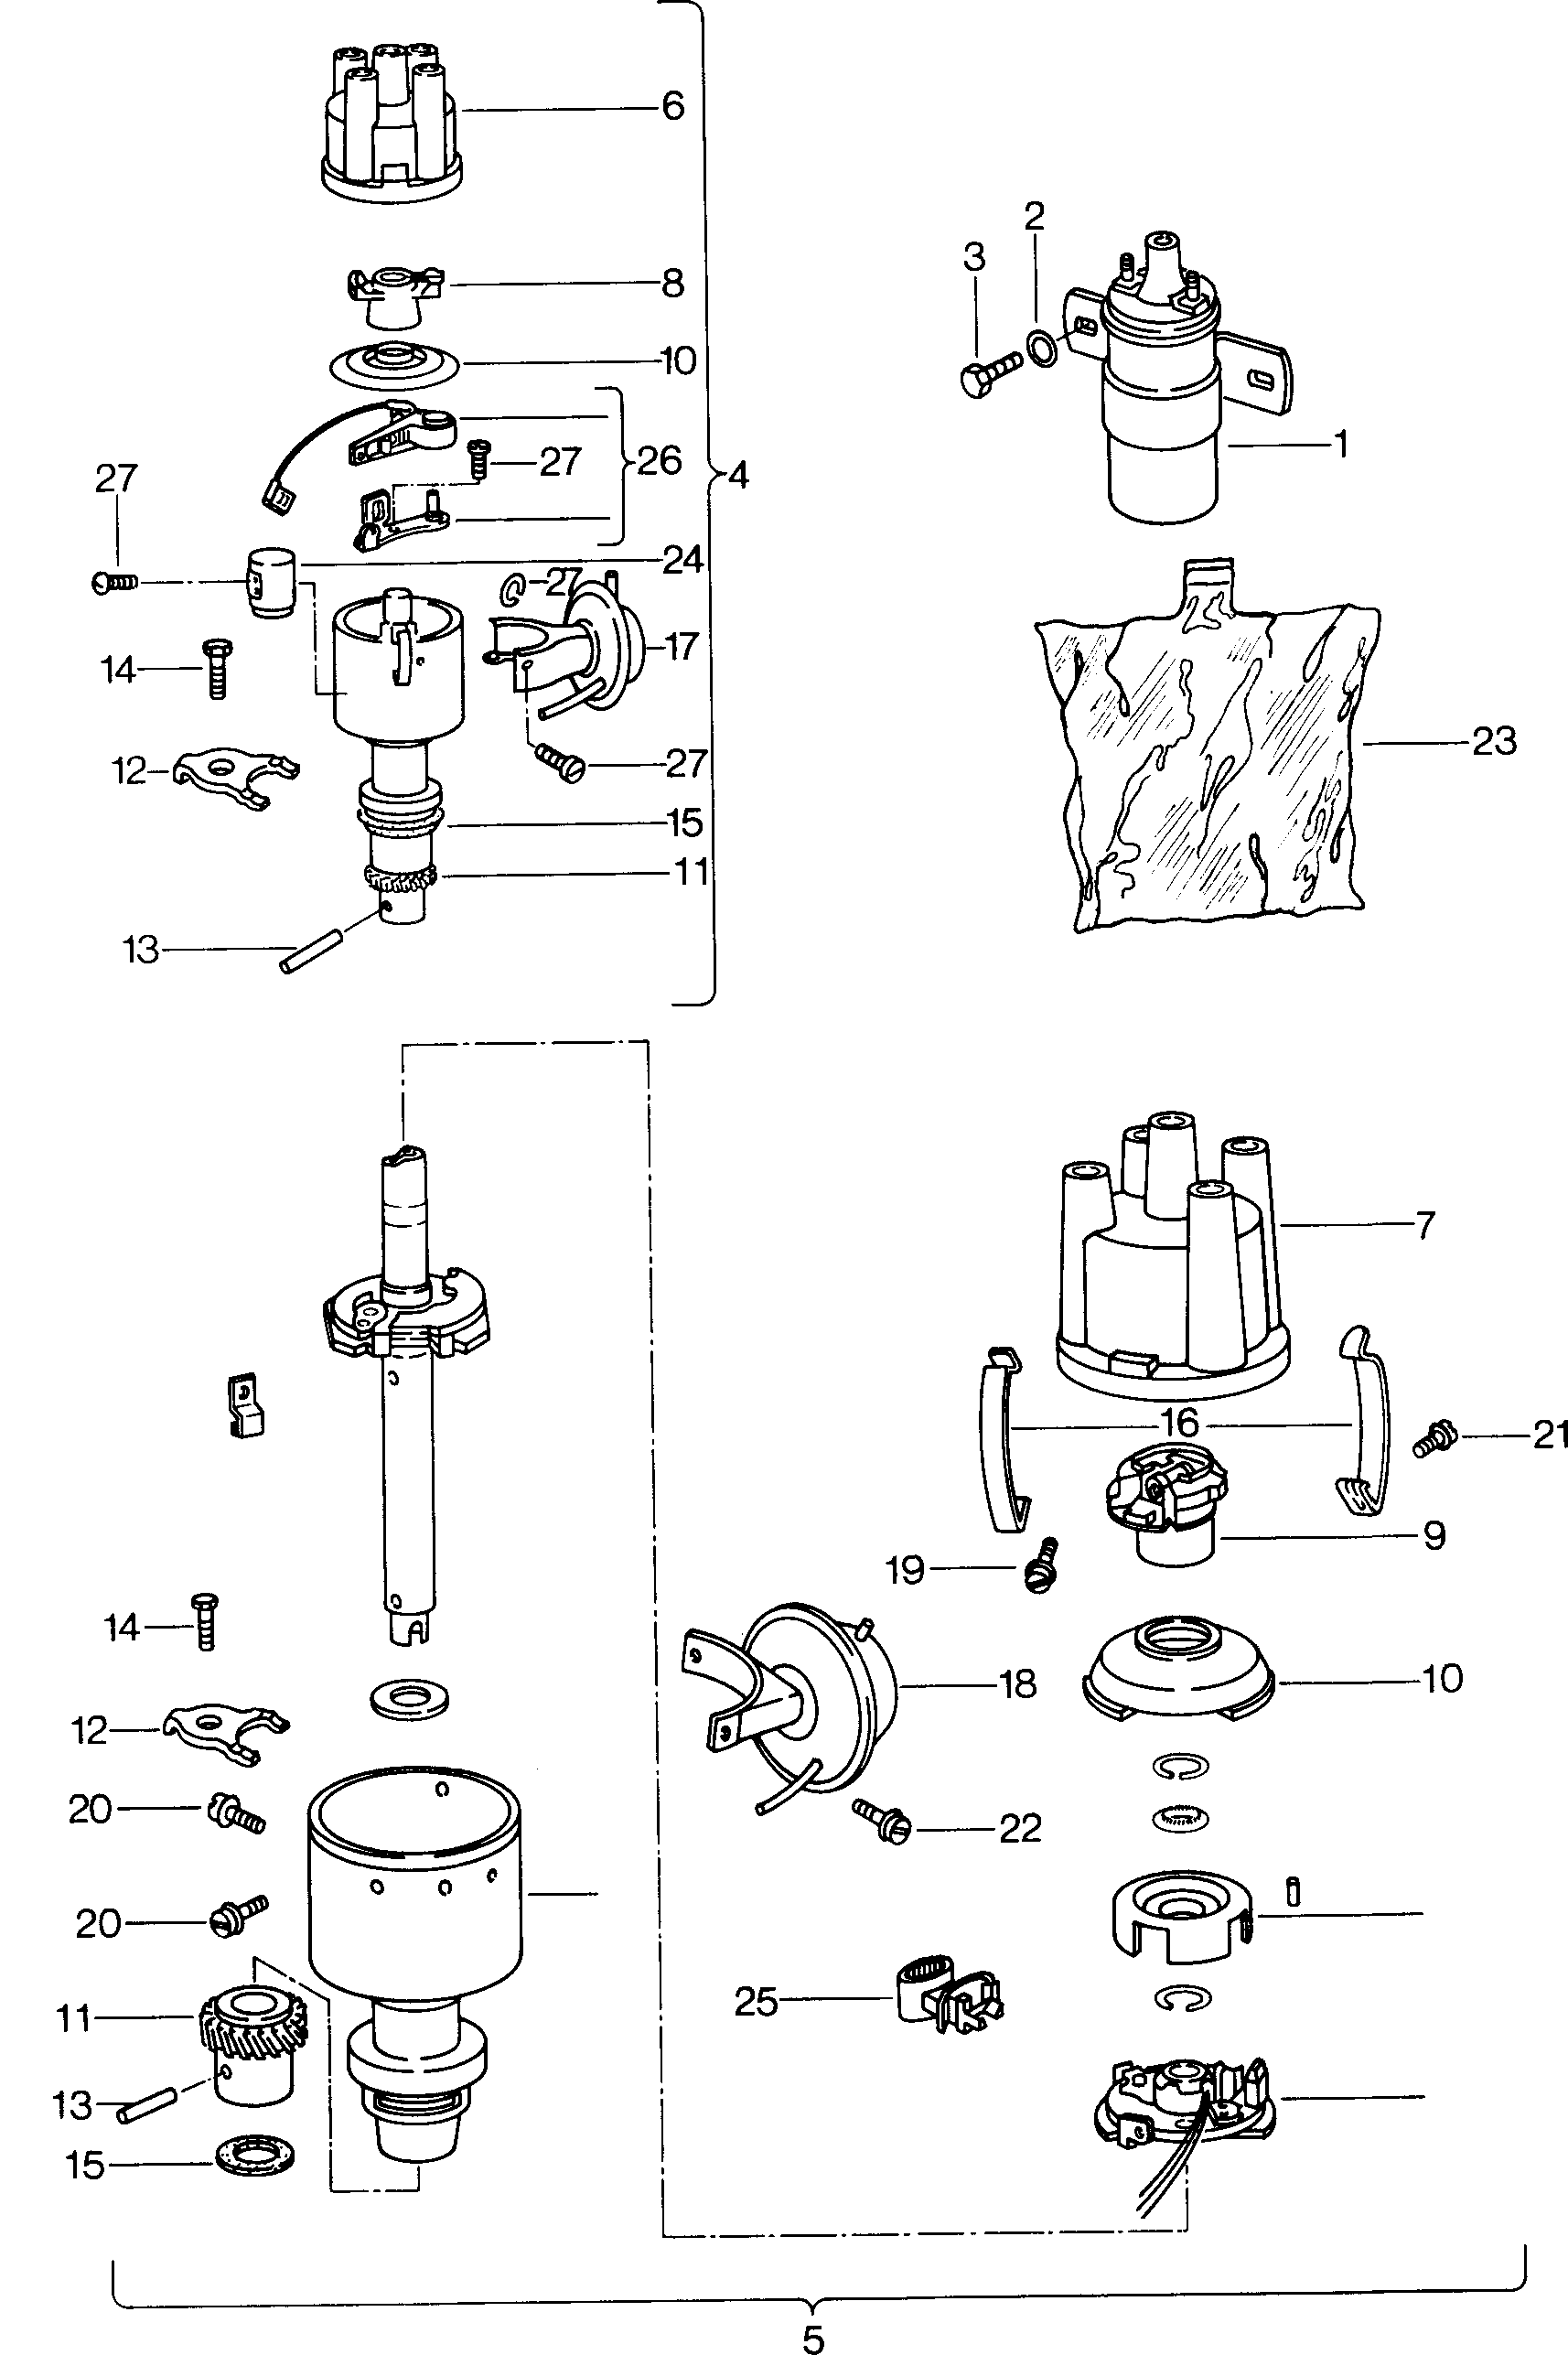 Ignition coilDistributor 12V - Mod.181 / Iltis - ilt